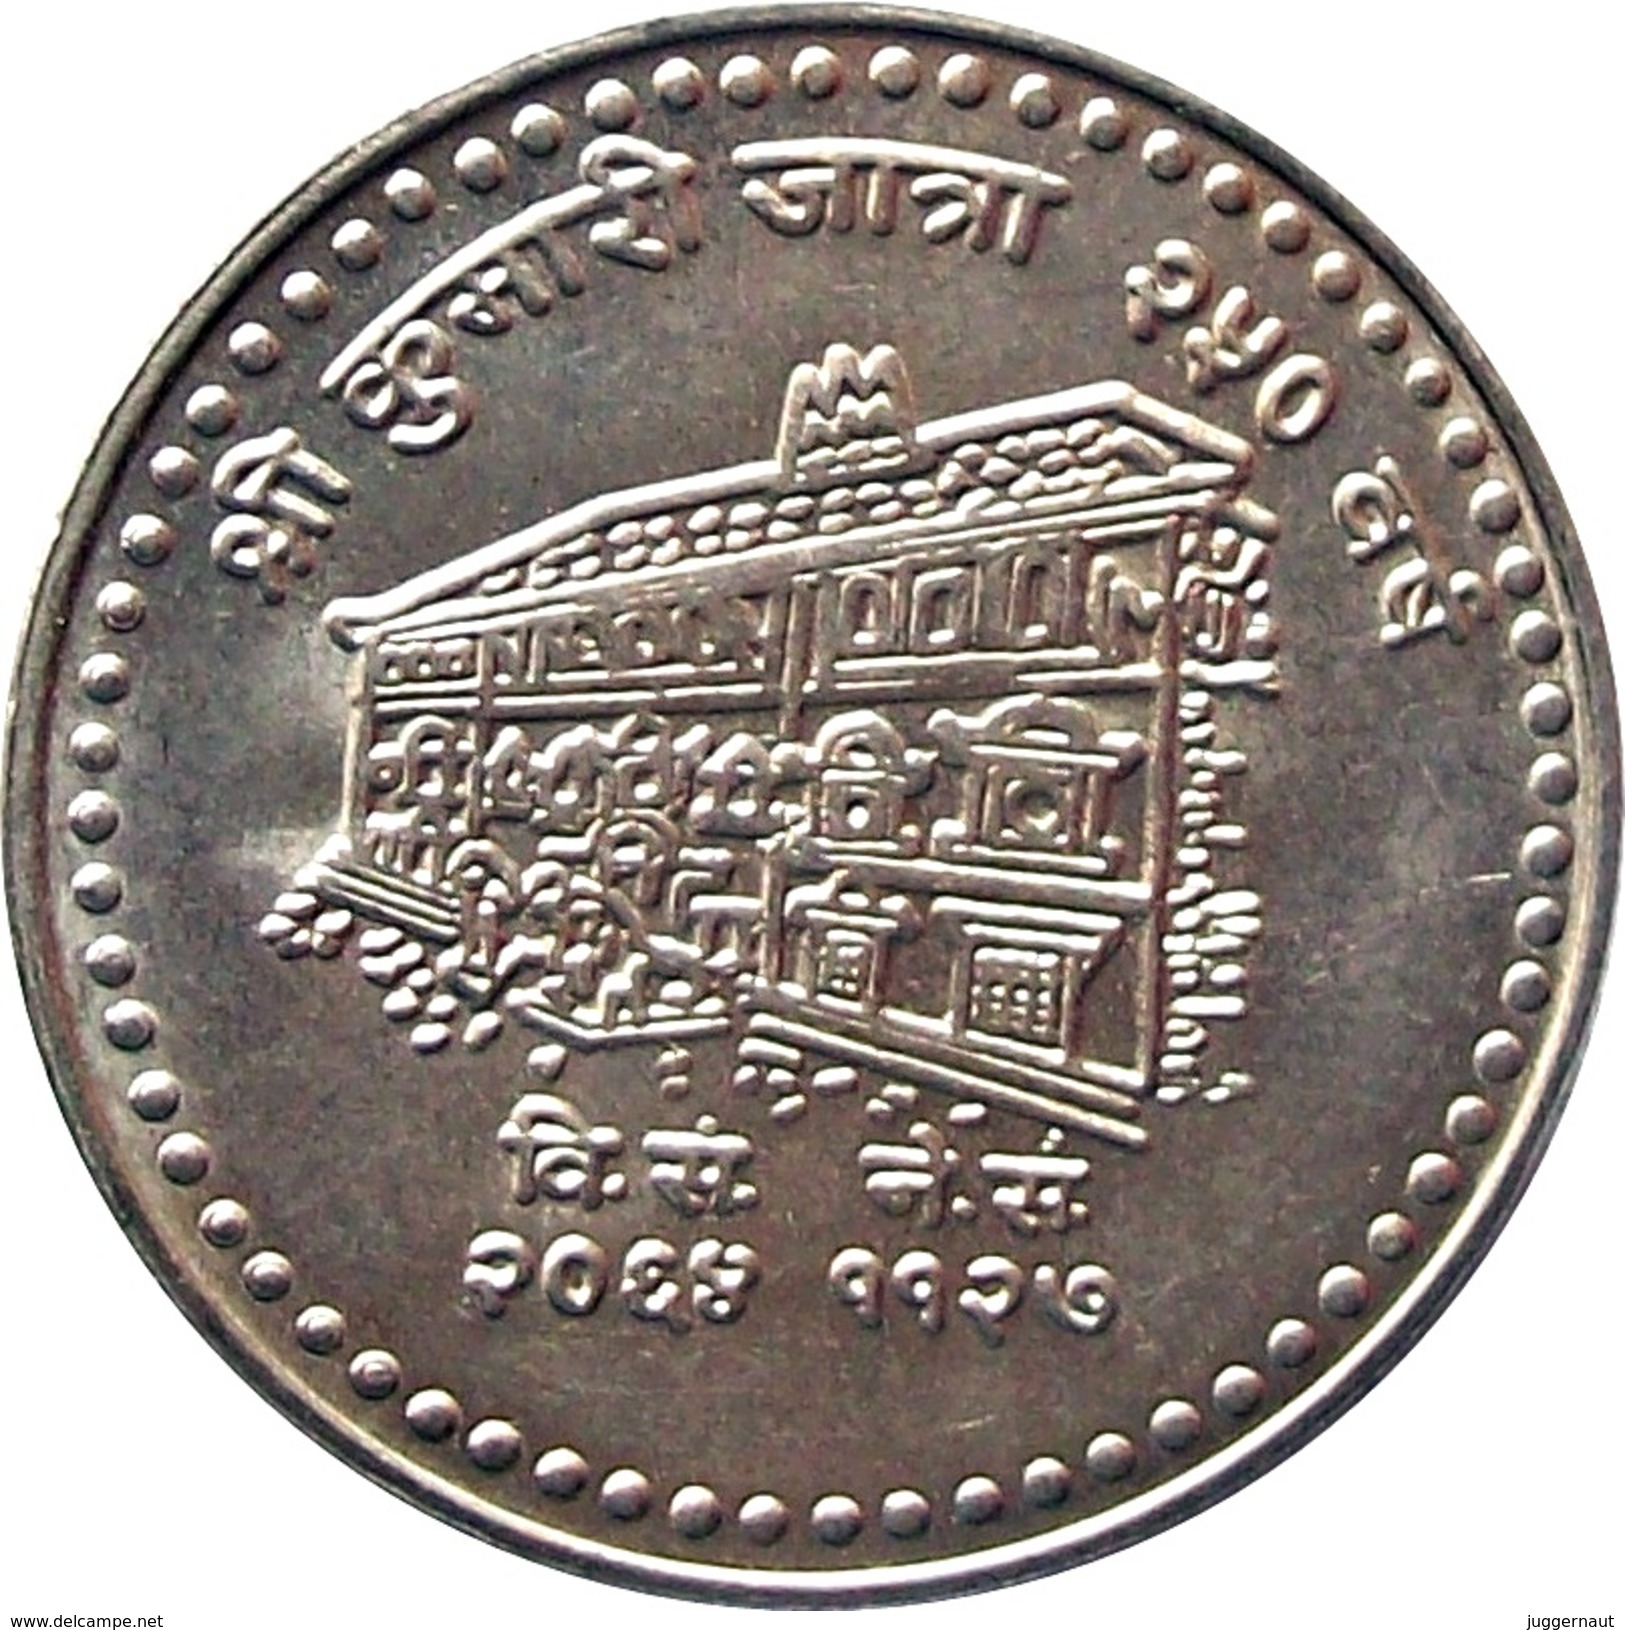 LIVING GODDESS KUMARI ANNIVERSARY RUPEE 50 COMMEMORATIVE COIN 2007 AD KM-1189 UNCIRCULATED - Nepal